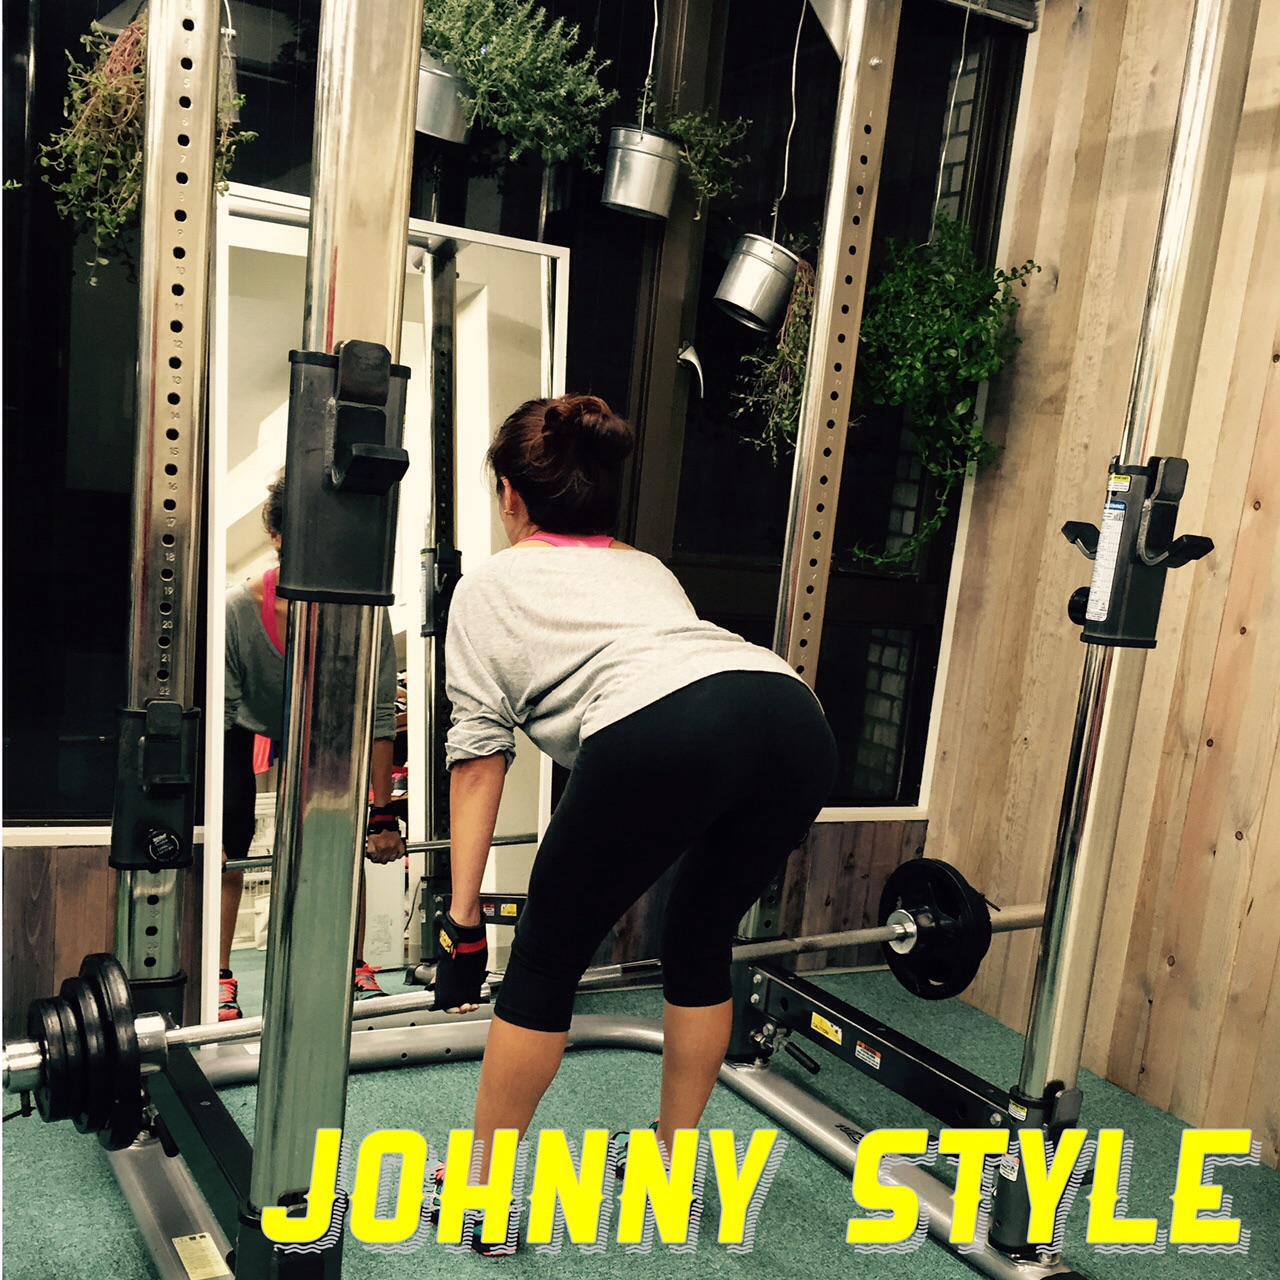 image | JOHNNY STYLE